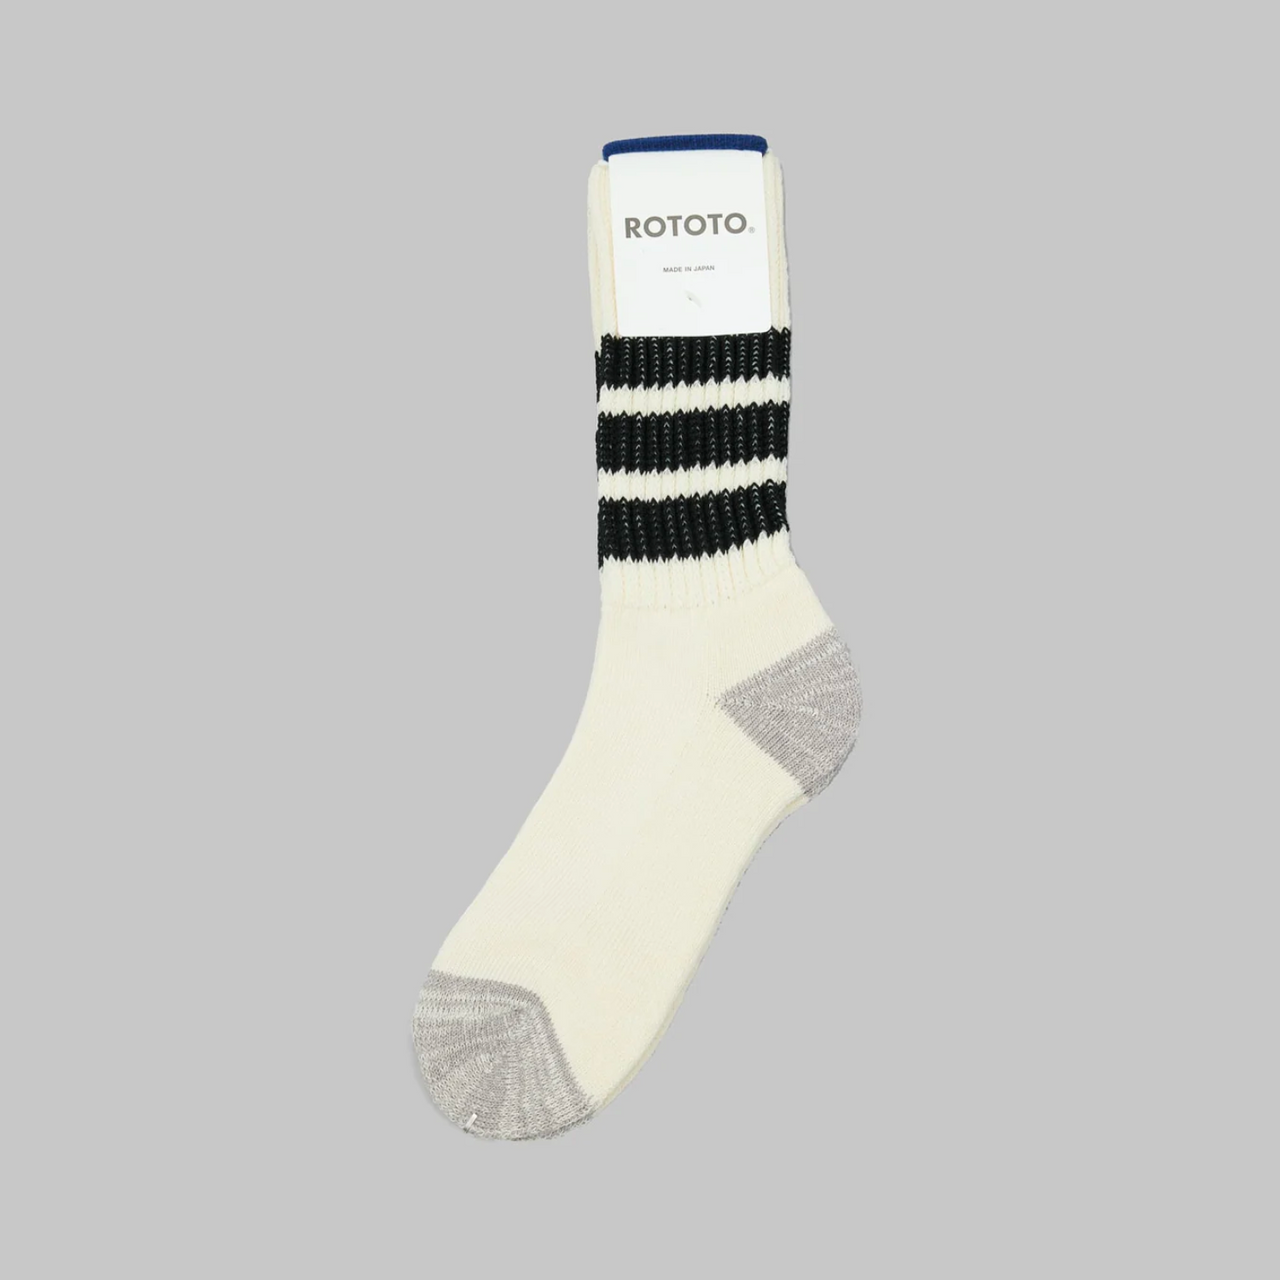 Drake General Store - RoToTo Ribbed Old School Crew Socks - Black